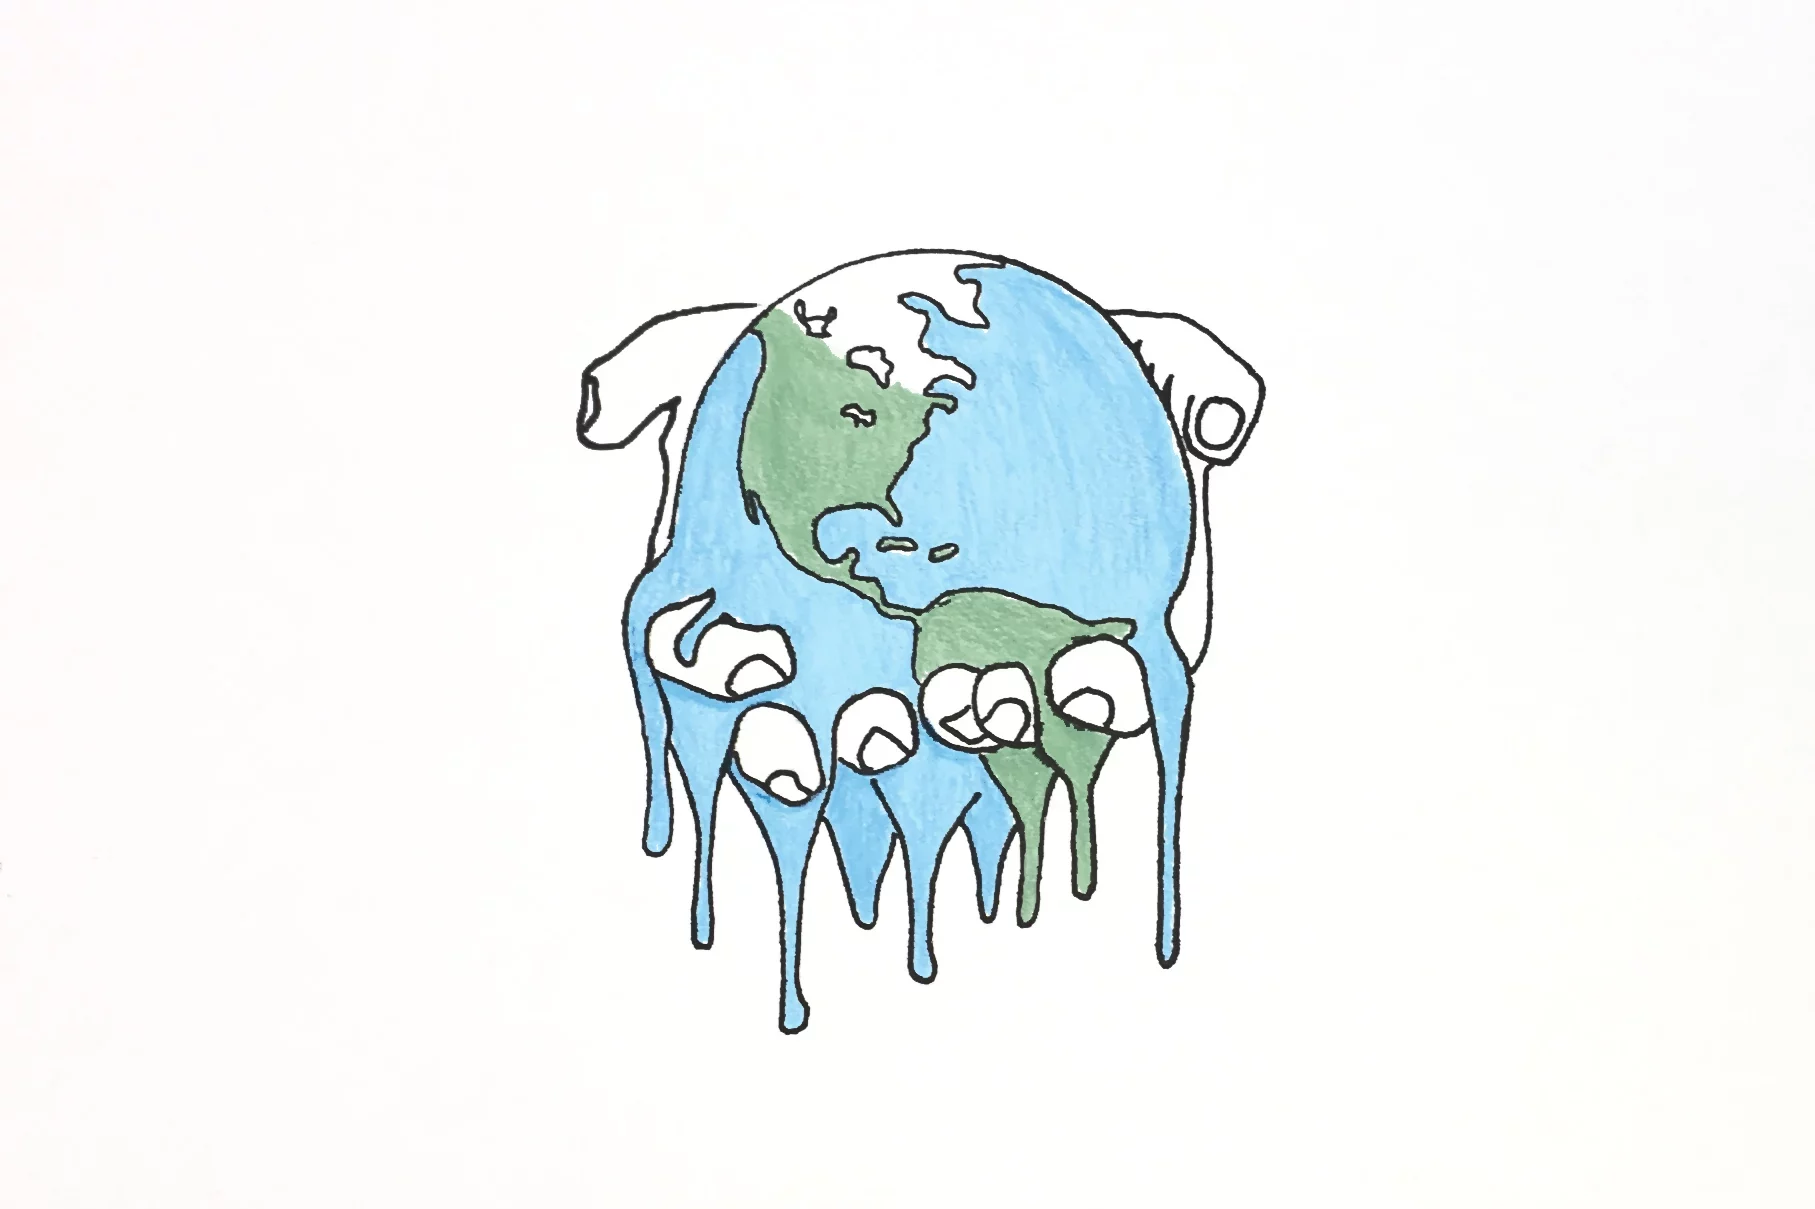 global warming drawing. global warming poster drawing | By Easy Drawing SA  | Facebook